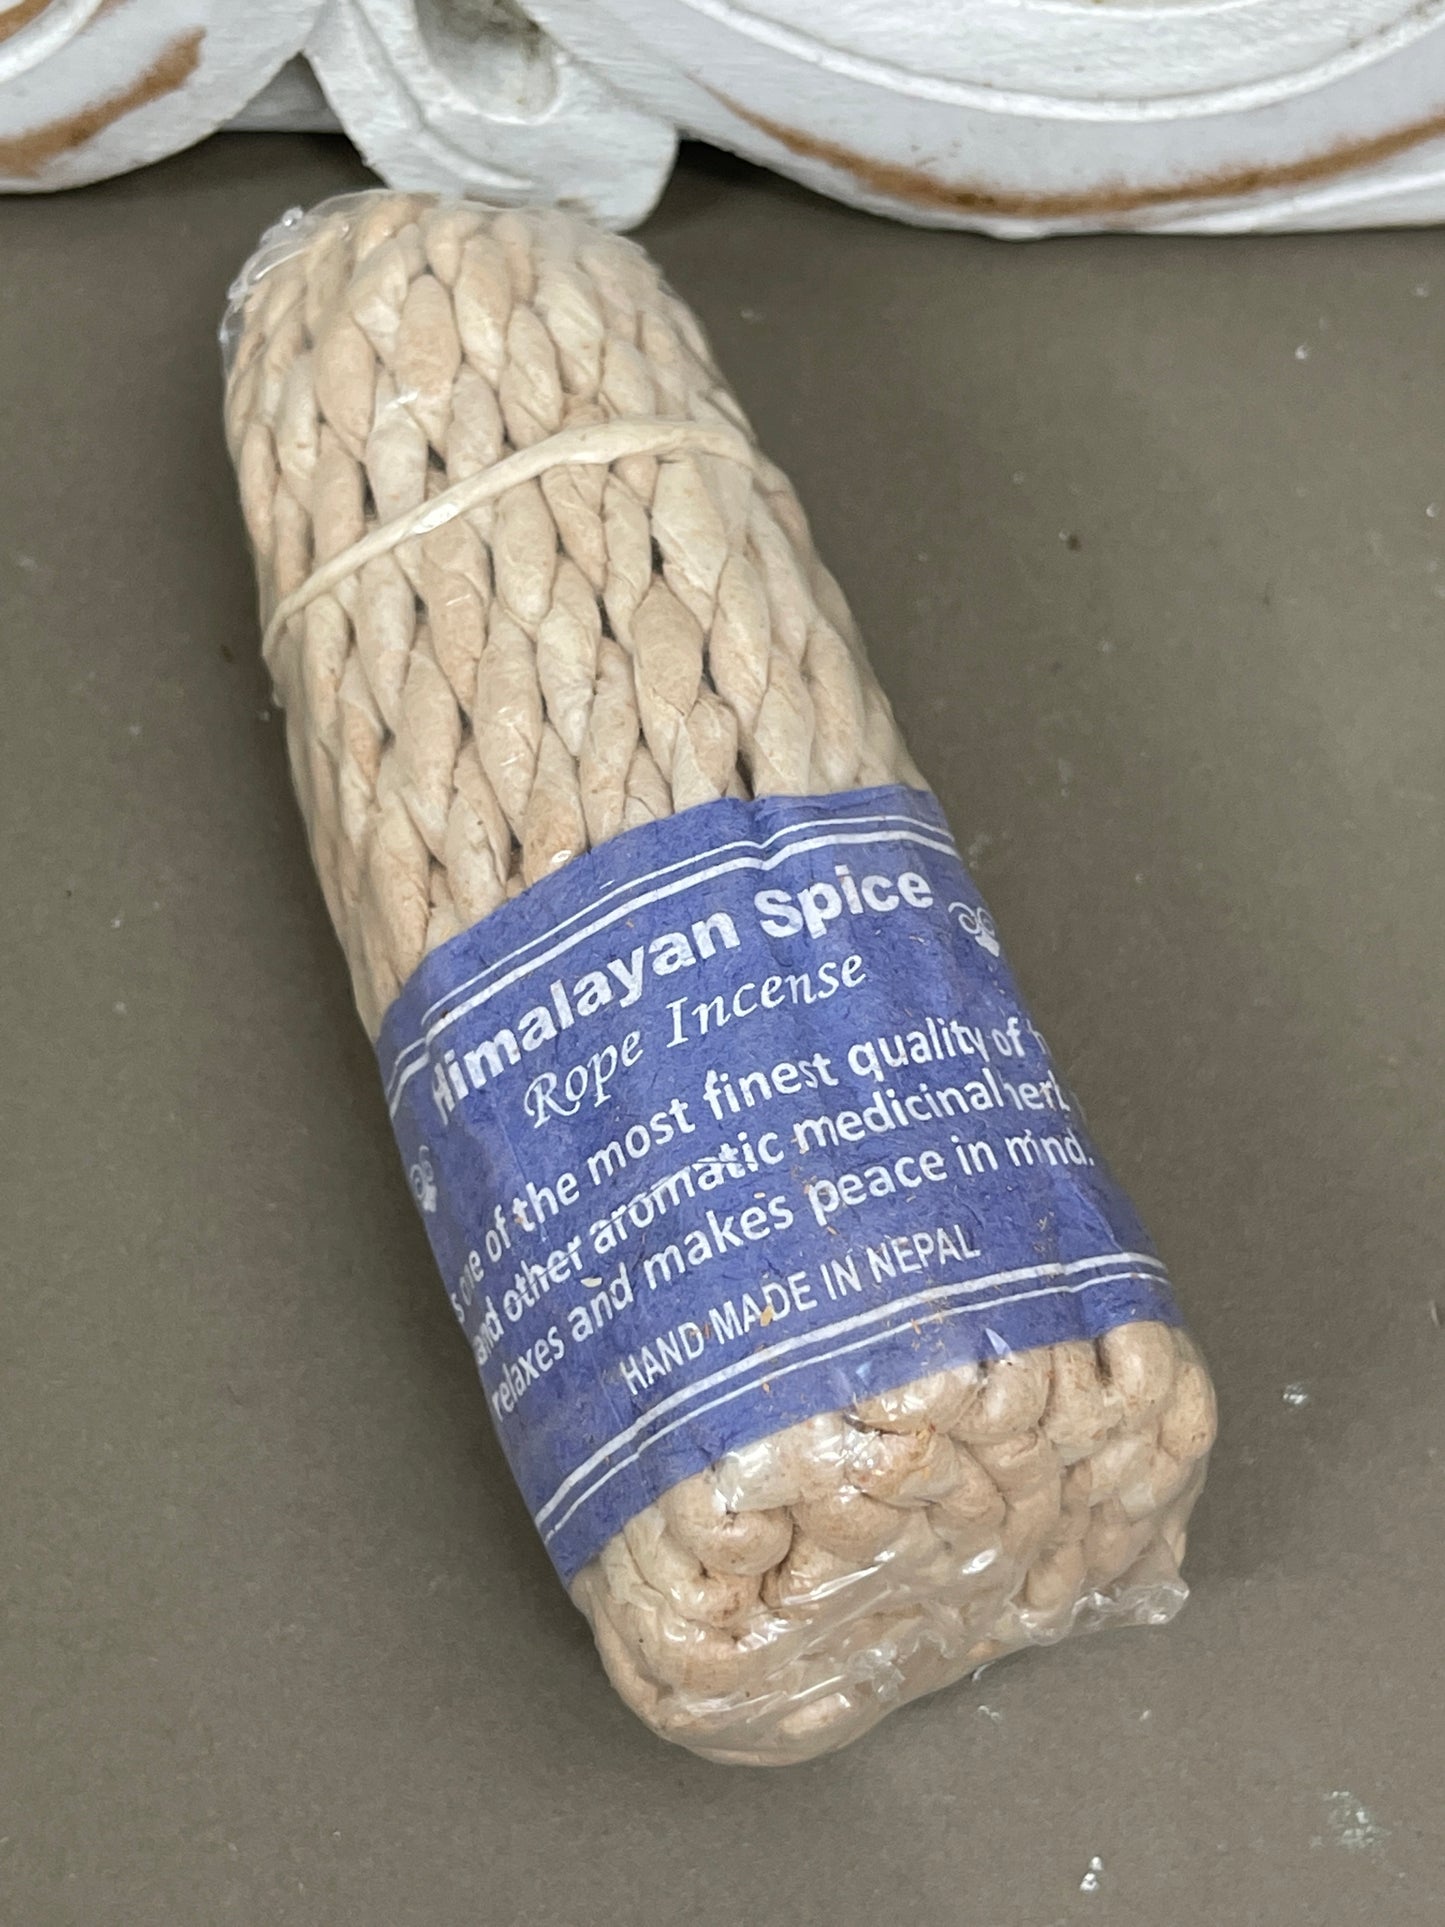 Himalayan Rope Incense